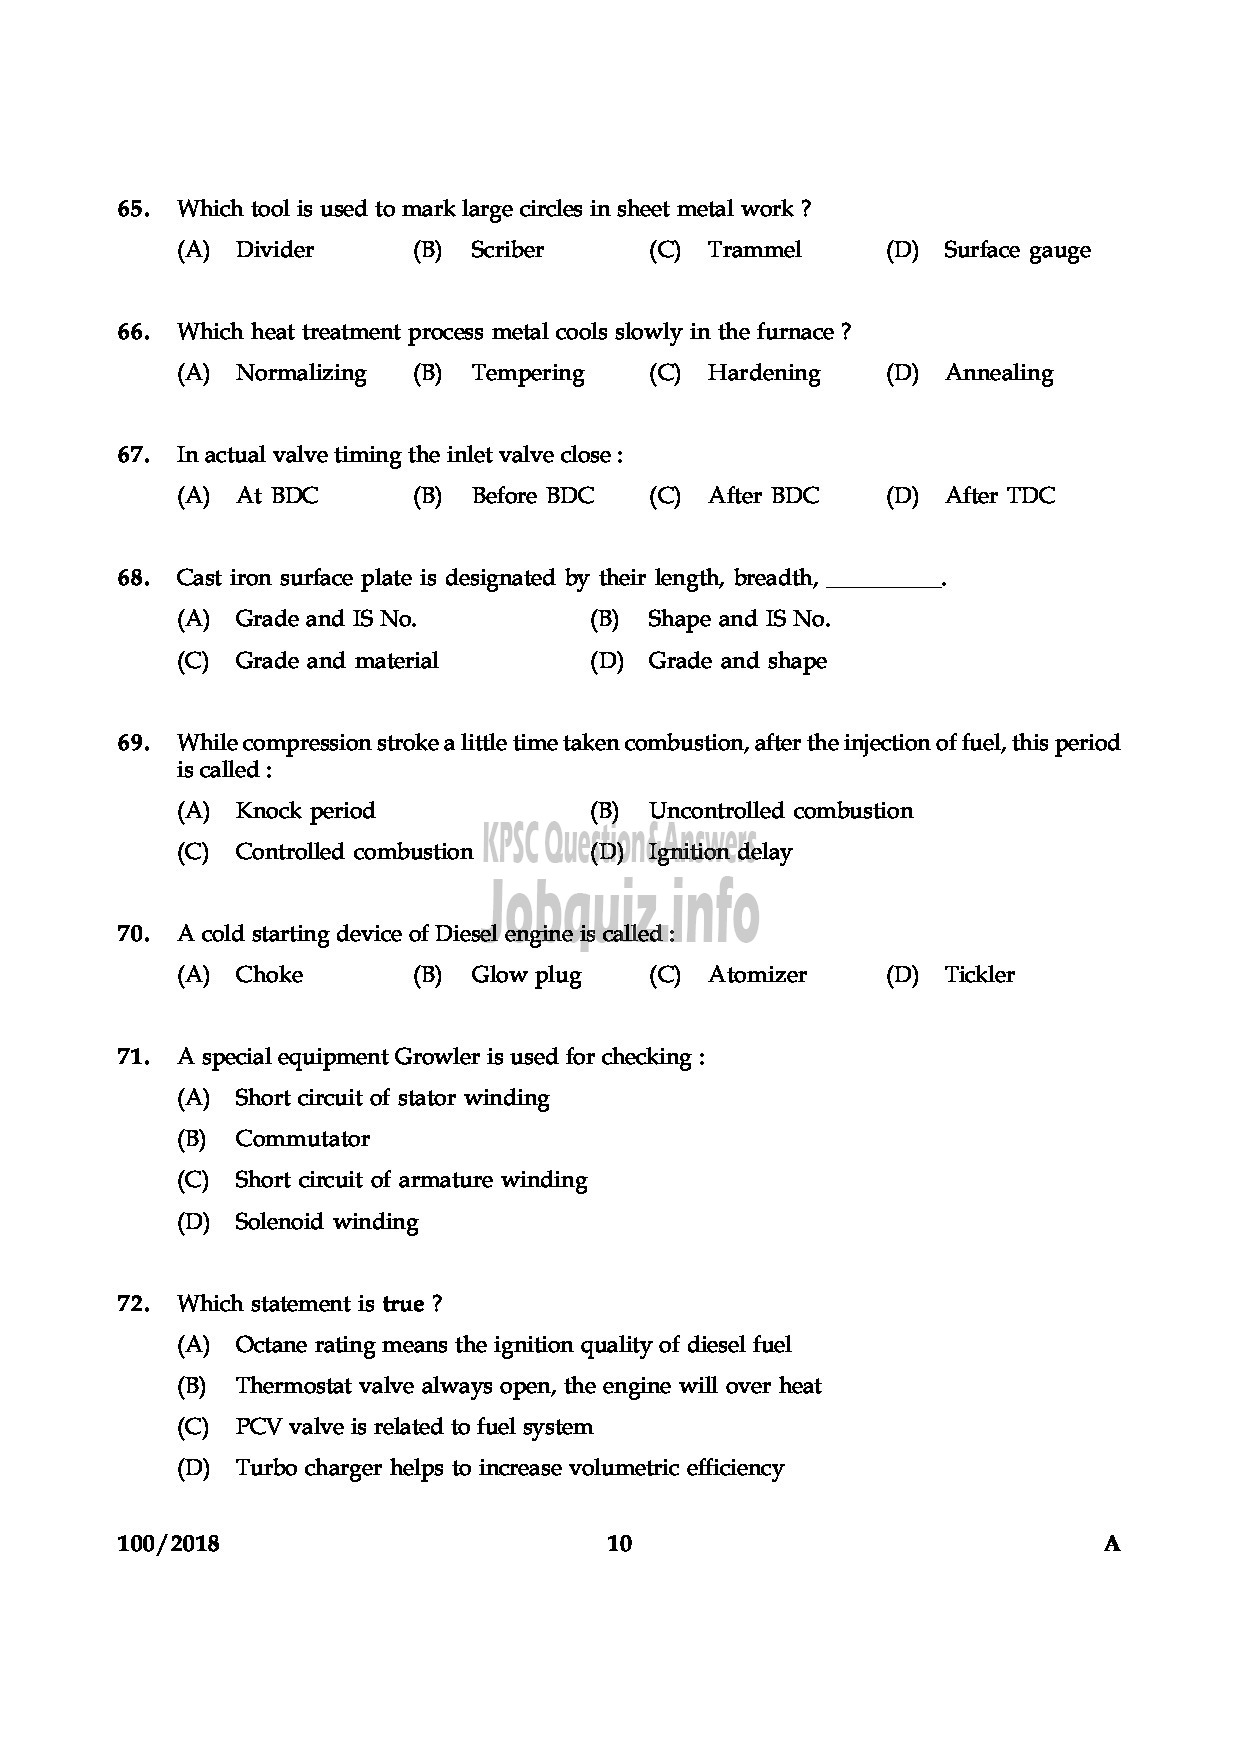 Kerala PSC Question Paper - JUNIOR INSTRUCTOR MECHANIC DIESEL INDUSTRIAL TRAINING ENGLISH -10